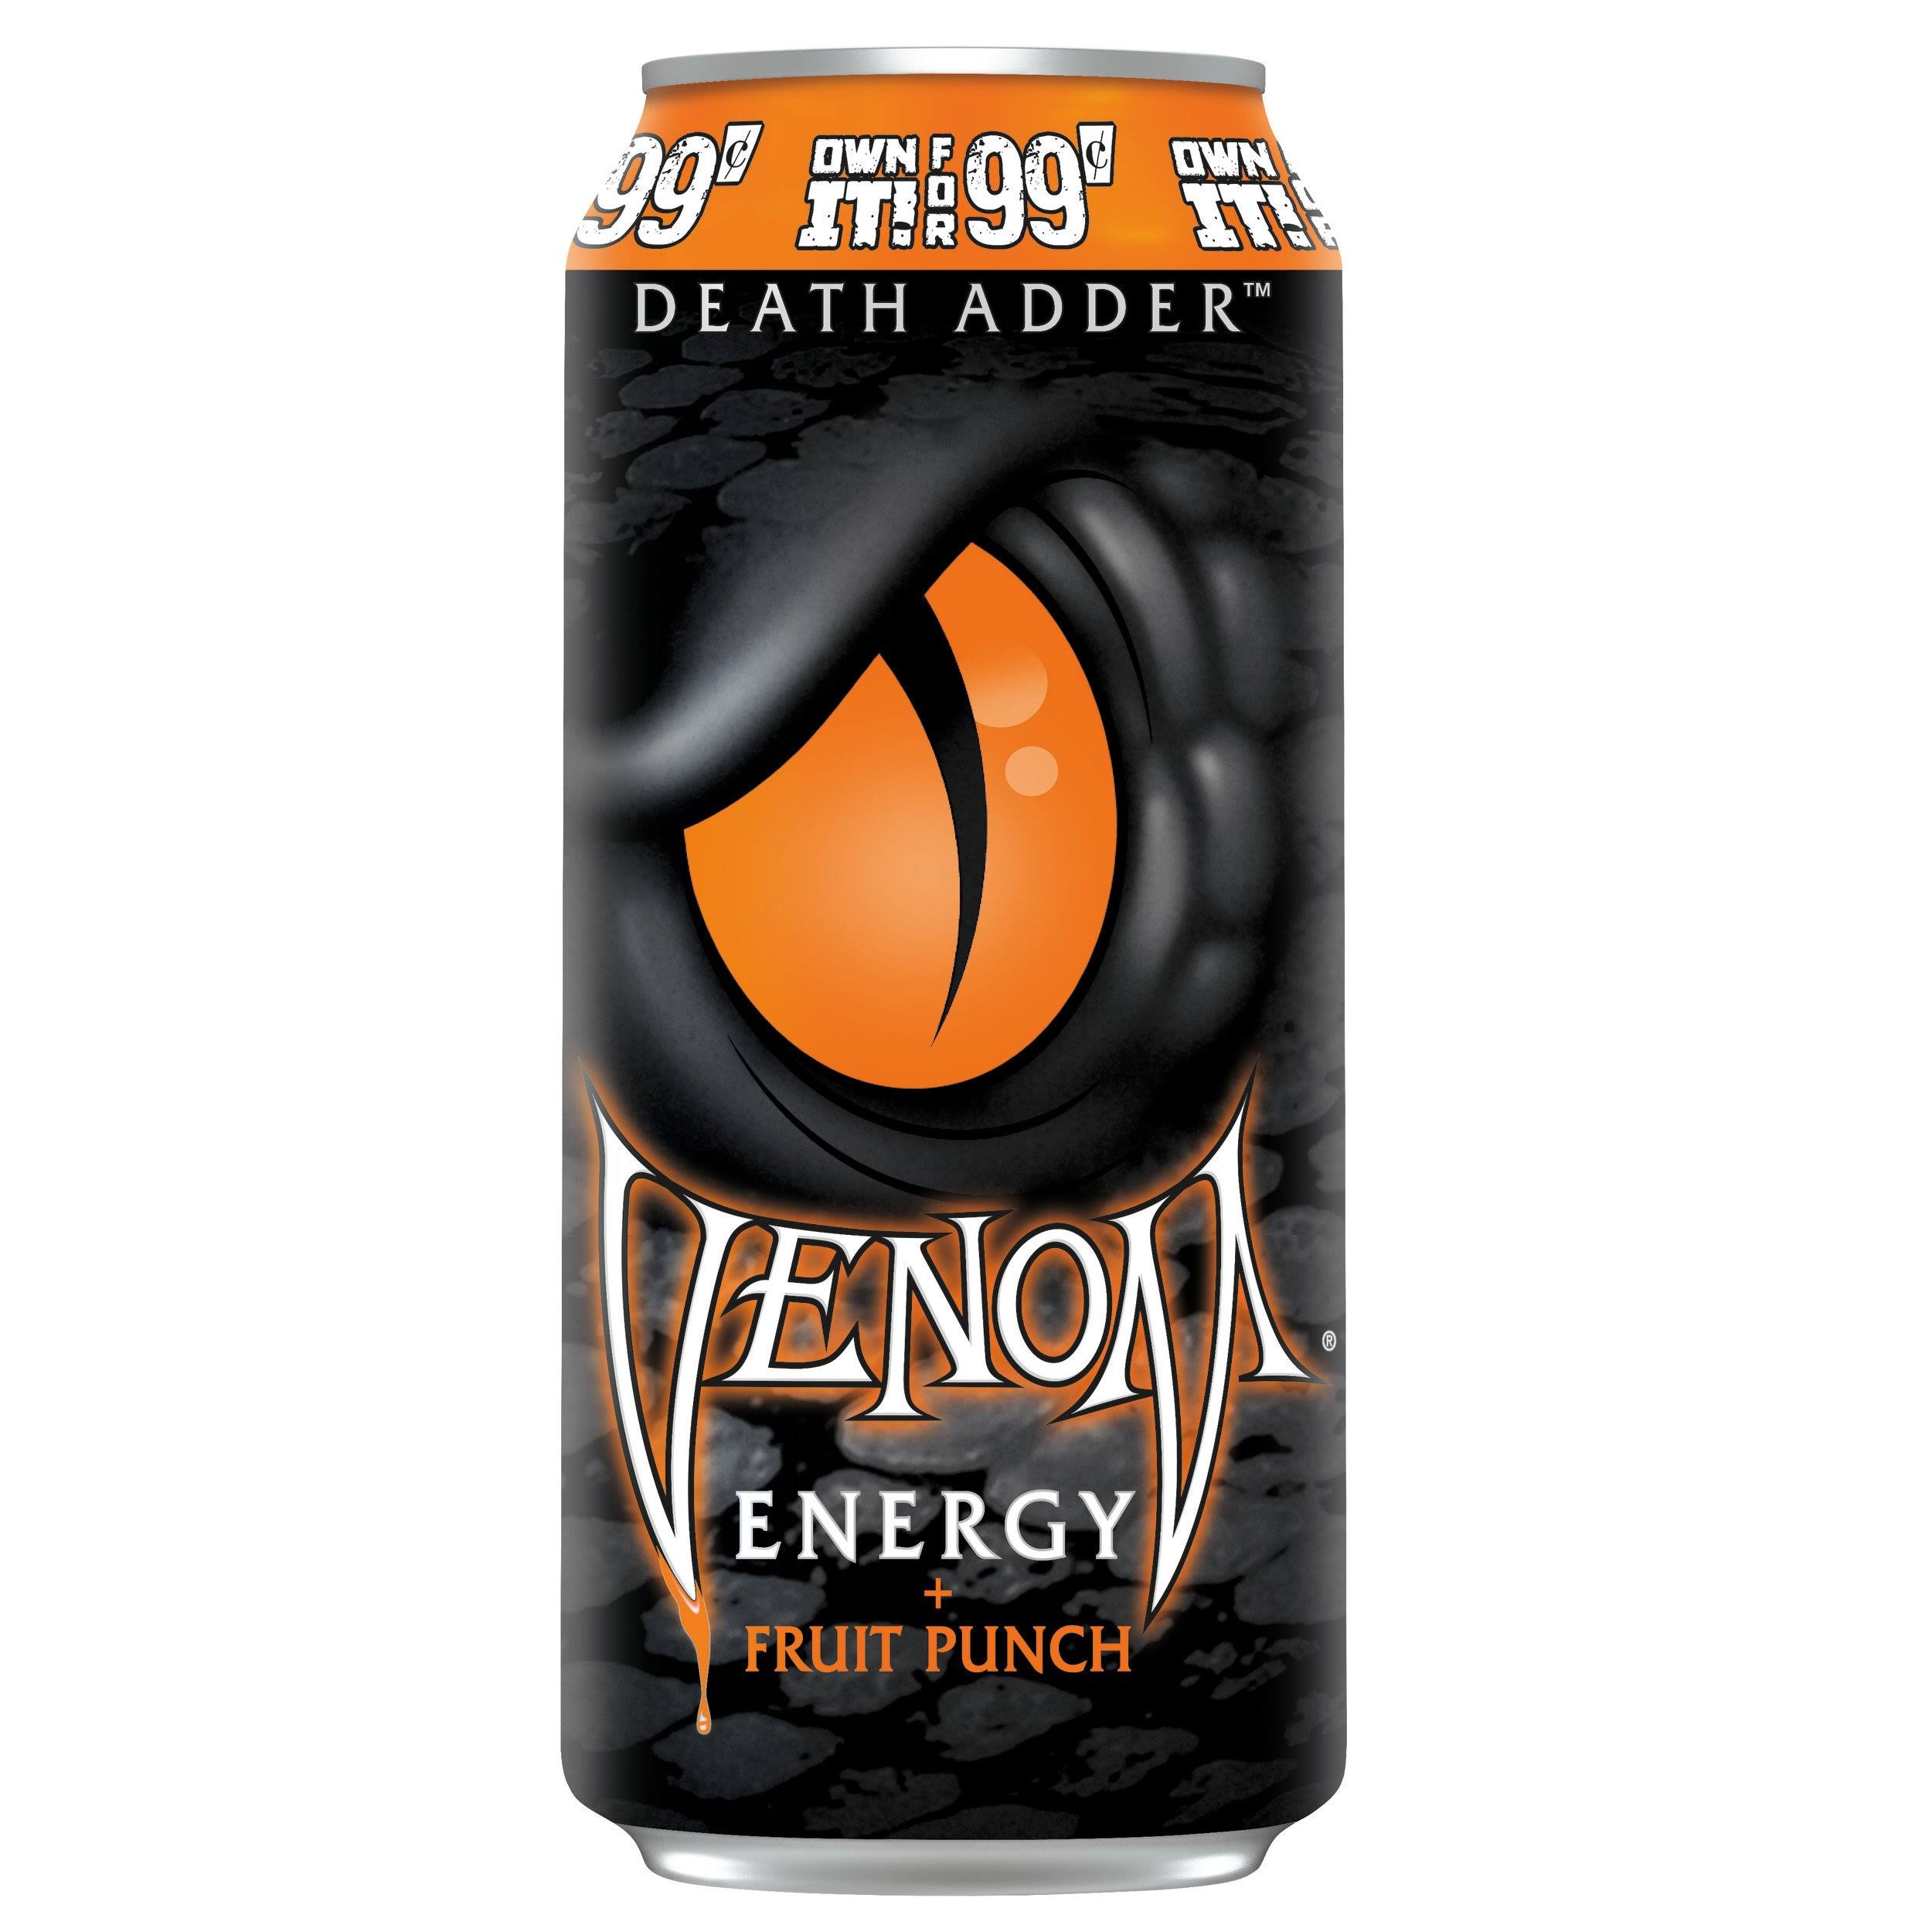 Venom Energy Death Adder Fruit Punch - 16oz